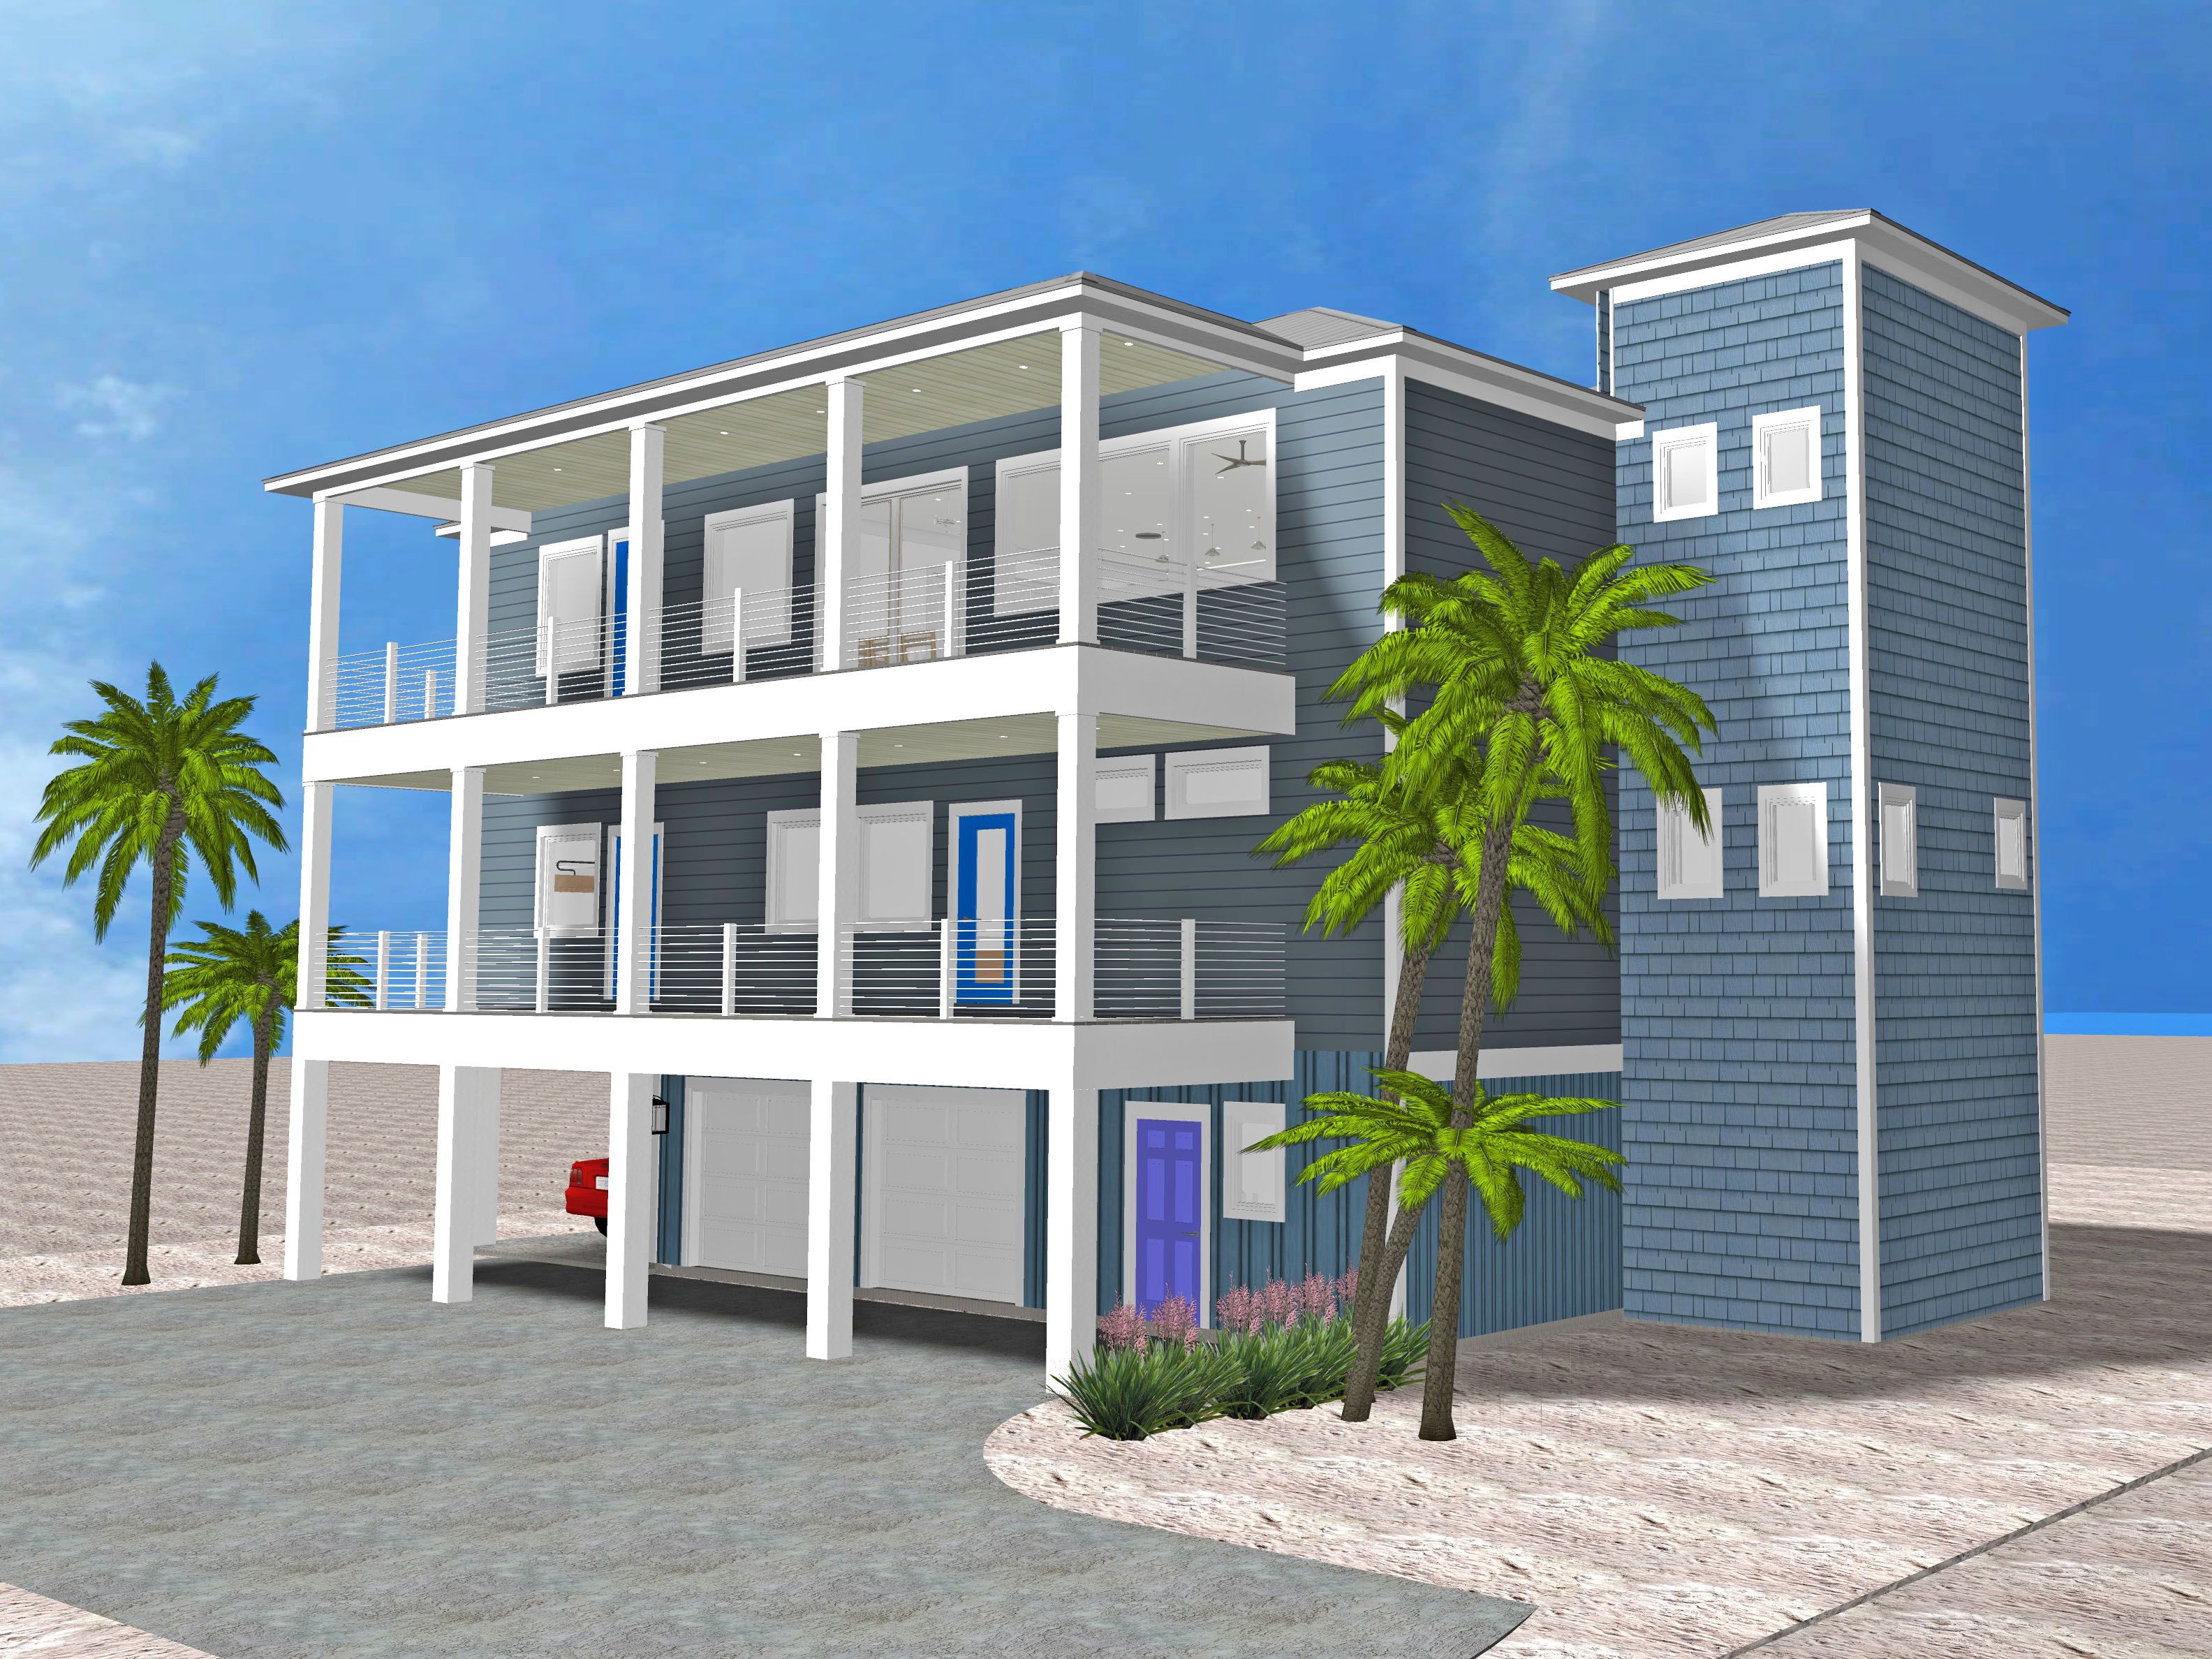 Vu modern coastal piling home on Navarre Beach